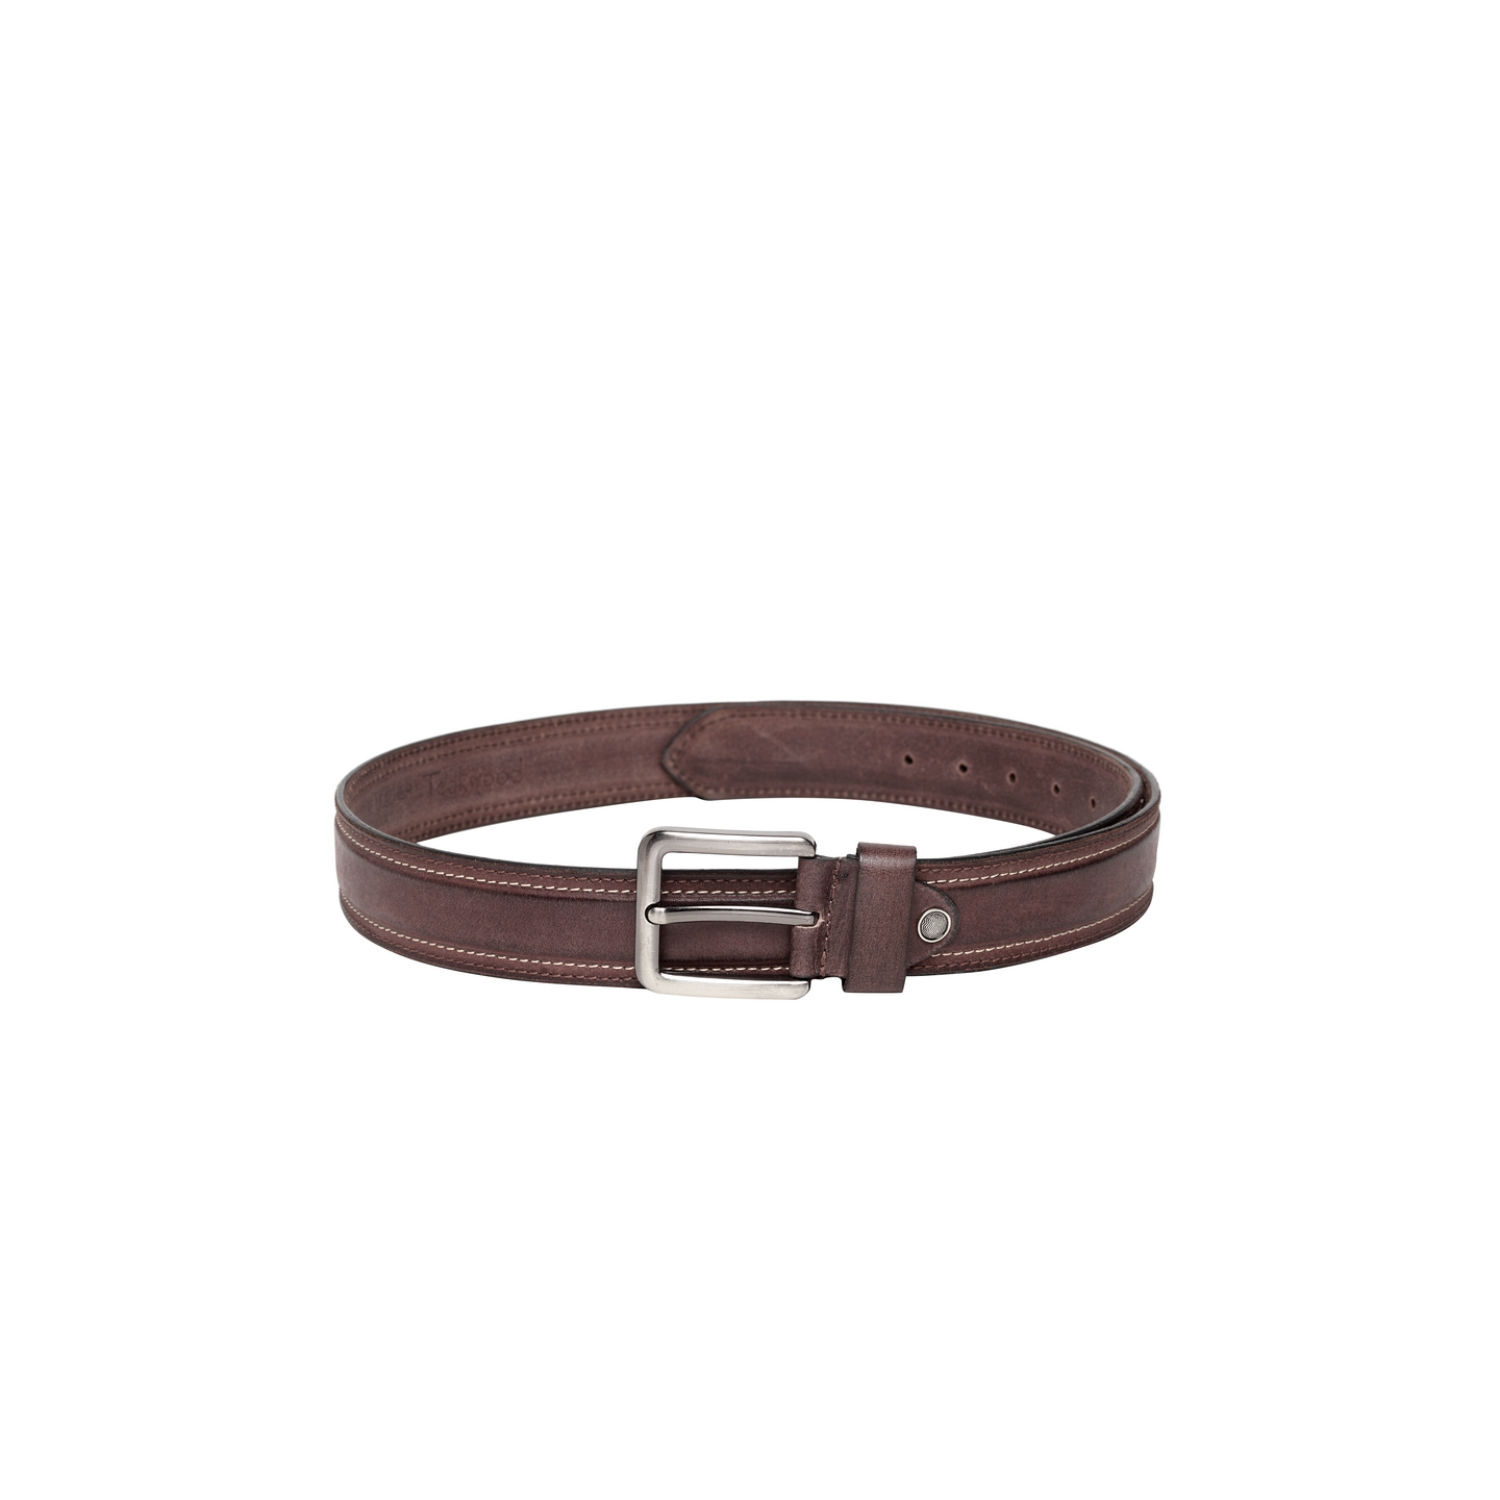 Teakwood Men Brown Genuine Leather Belt with contrast stitch details - 38